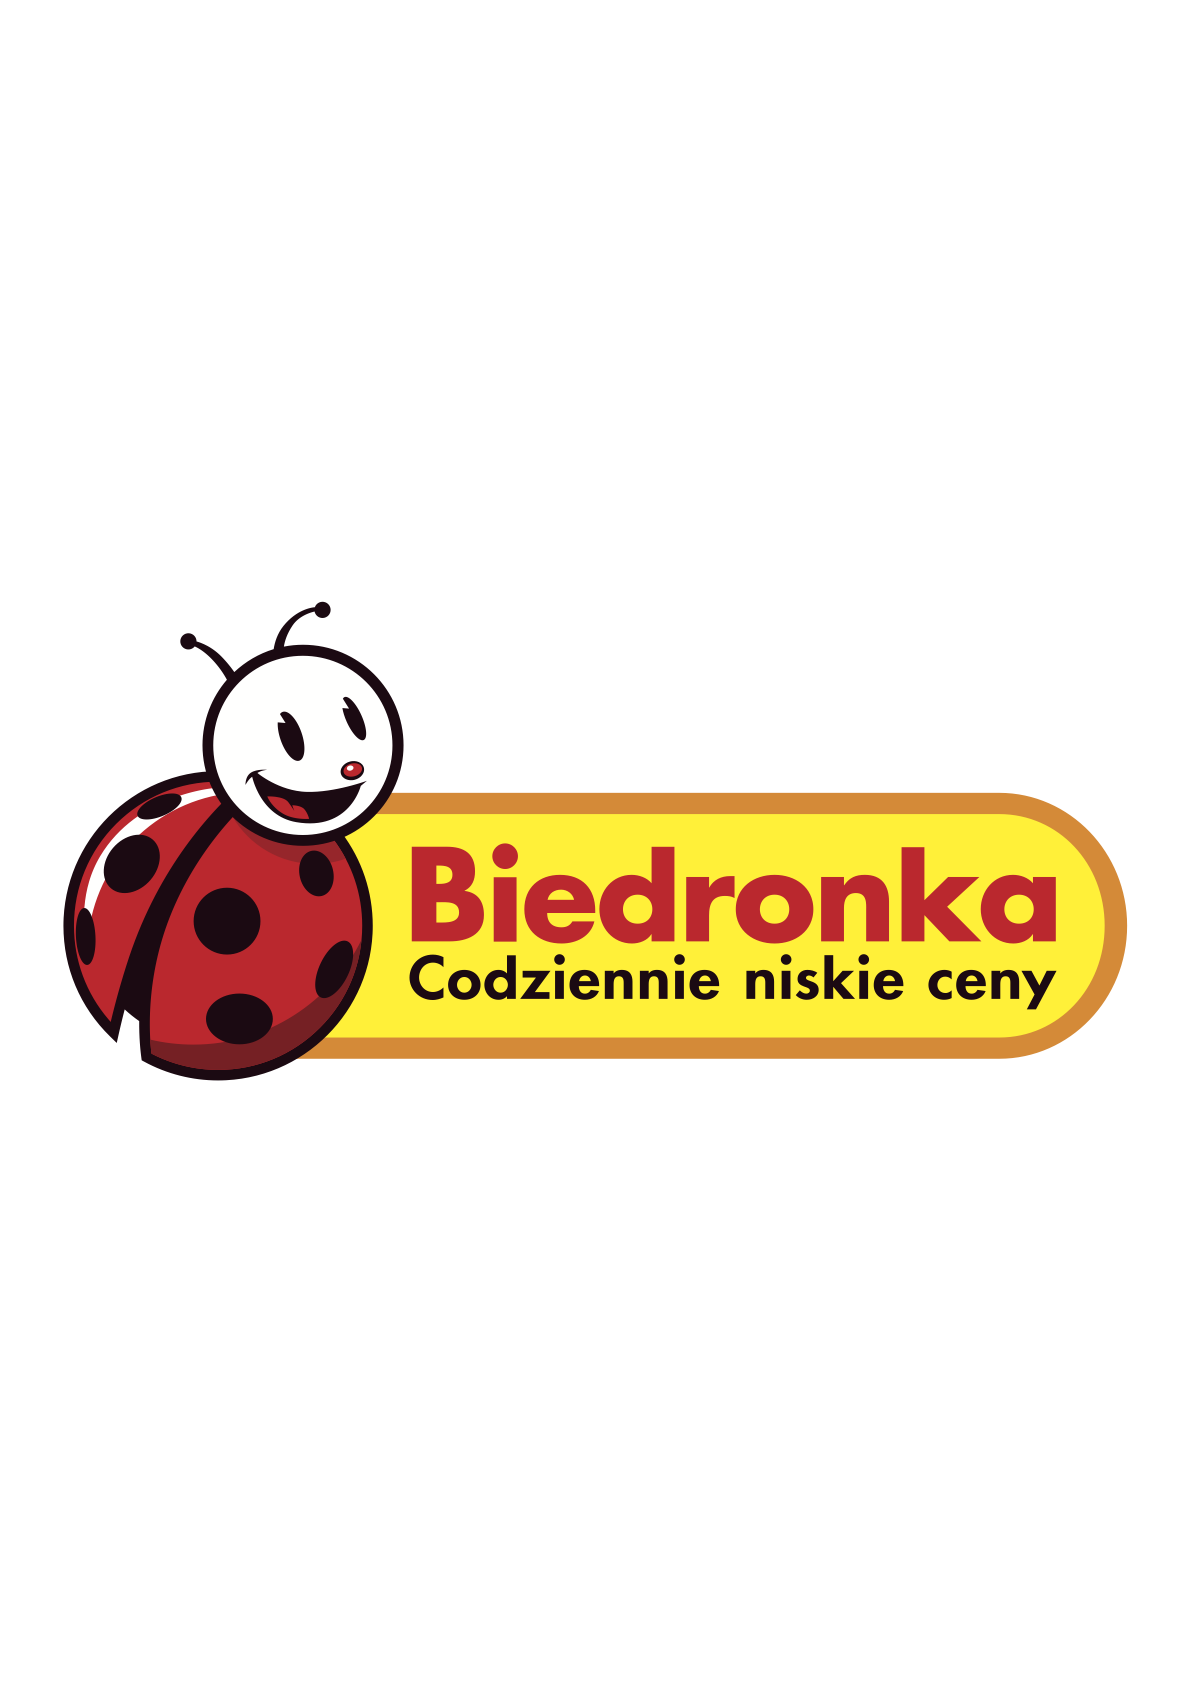 Jeronimo Martins Polska owner of Biedronka retail chain 